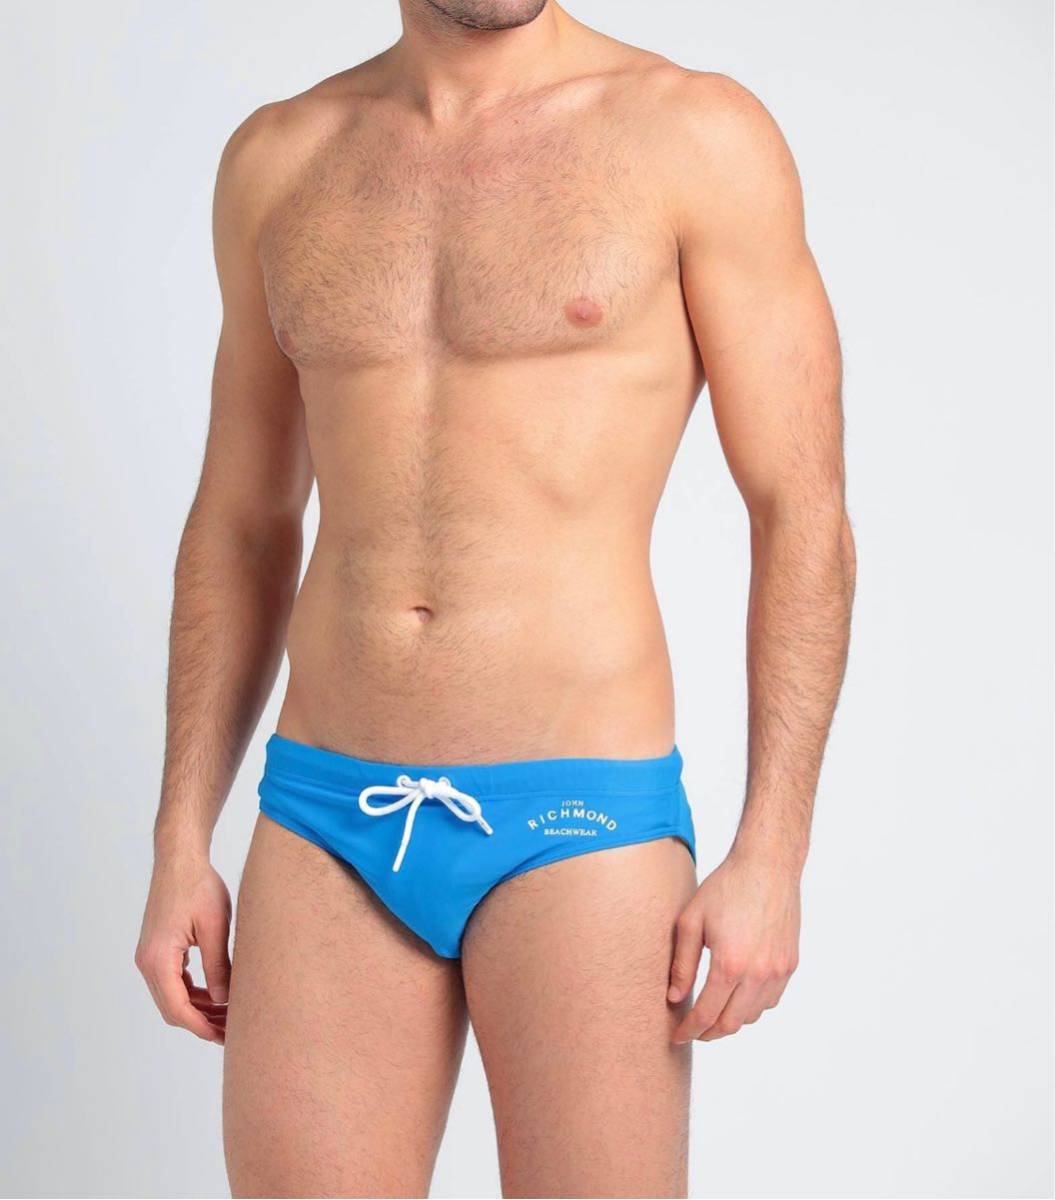 JOHN RICHMOND ジョンリッチモンド BEACHWEAR ブルー M-ML(XS) 競泳水着 競泳パンツ ビキニ水着 競パン メンズビーチウエア 男性水着の画像8